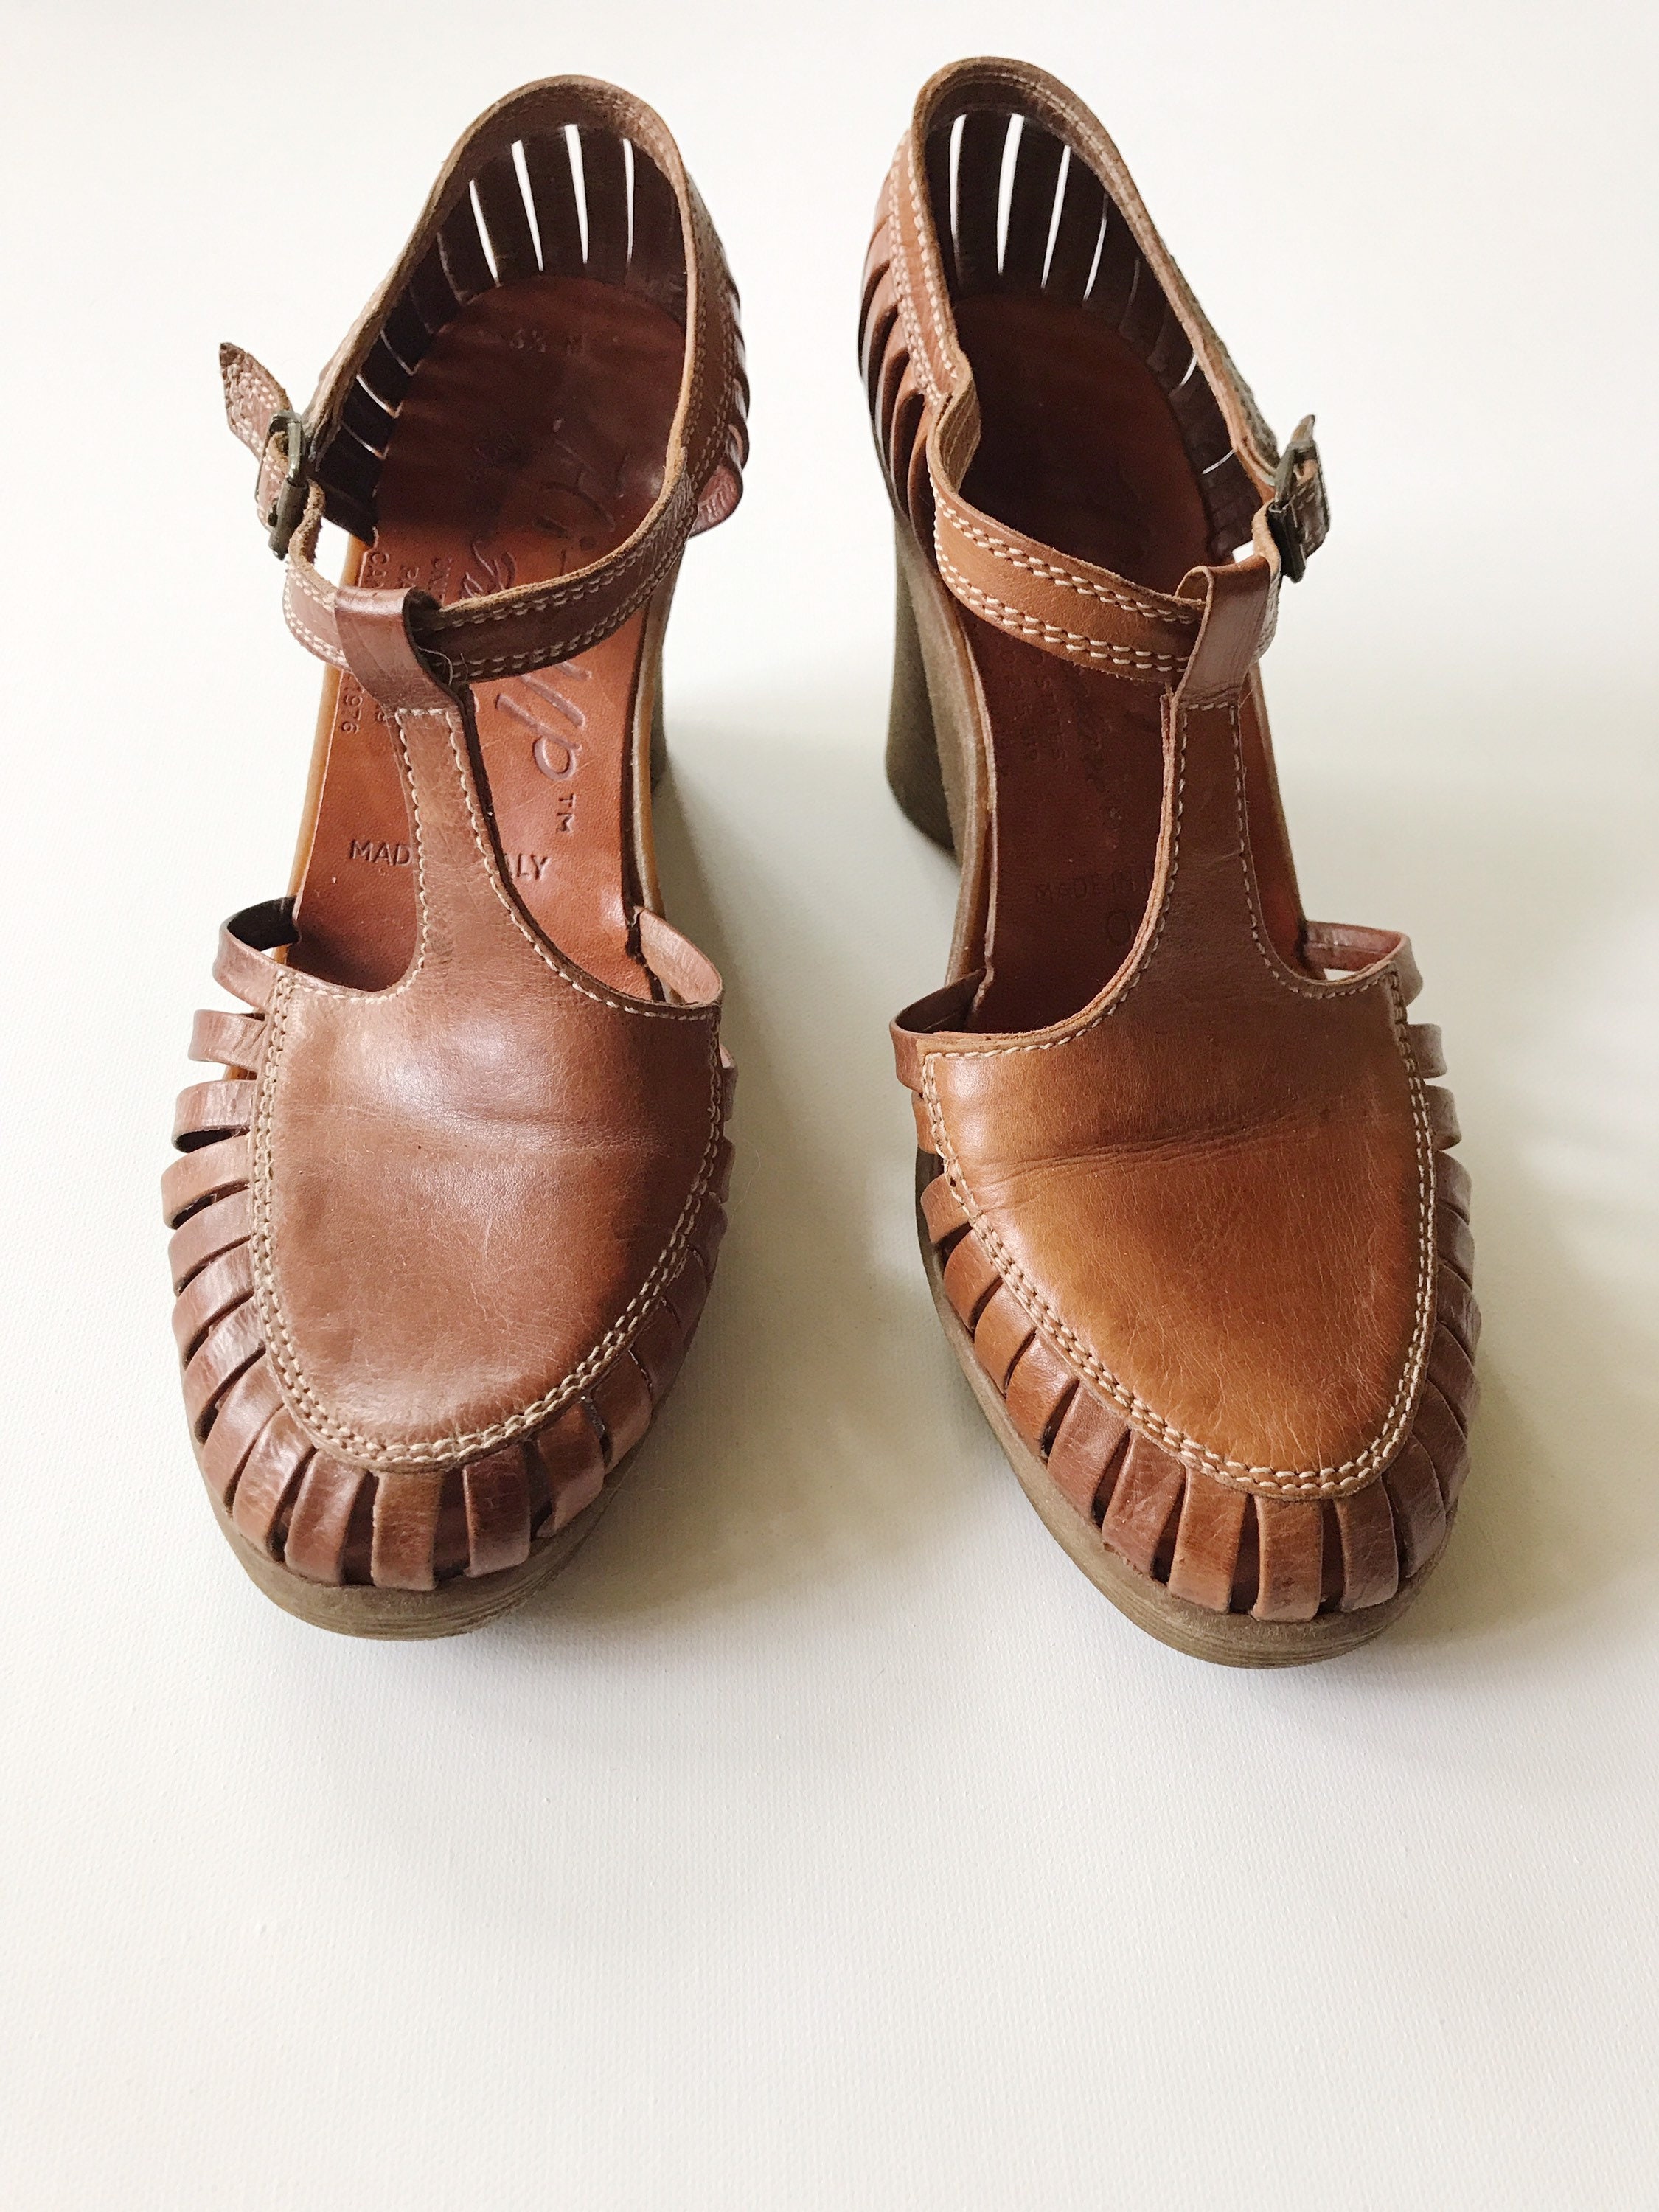 vintage Famolare shoes / 70s platform shoes / Caged sandals